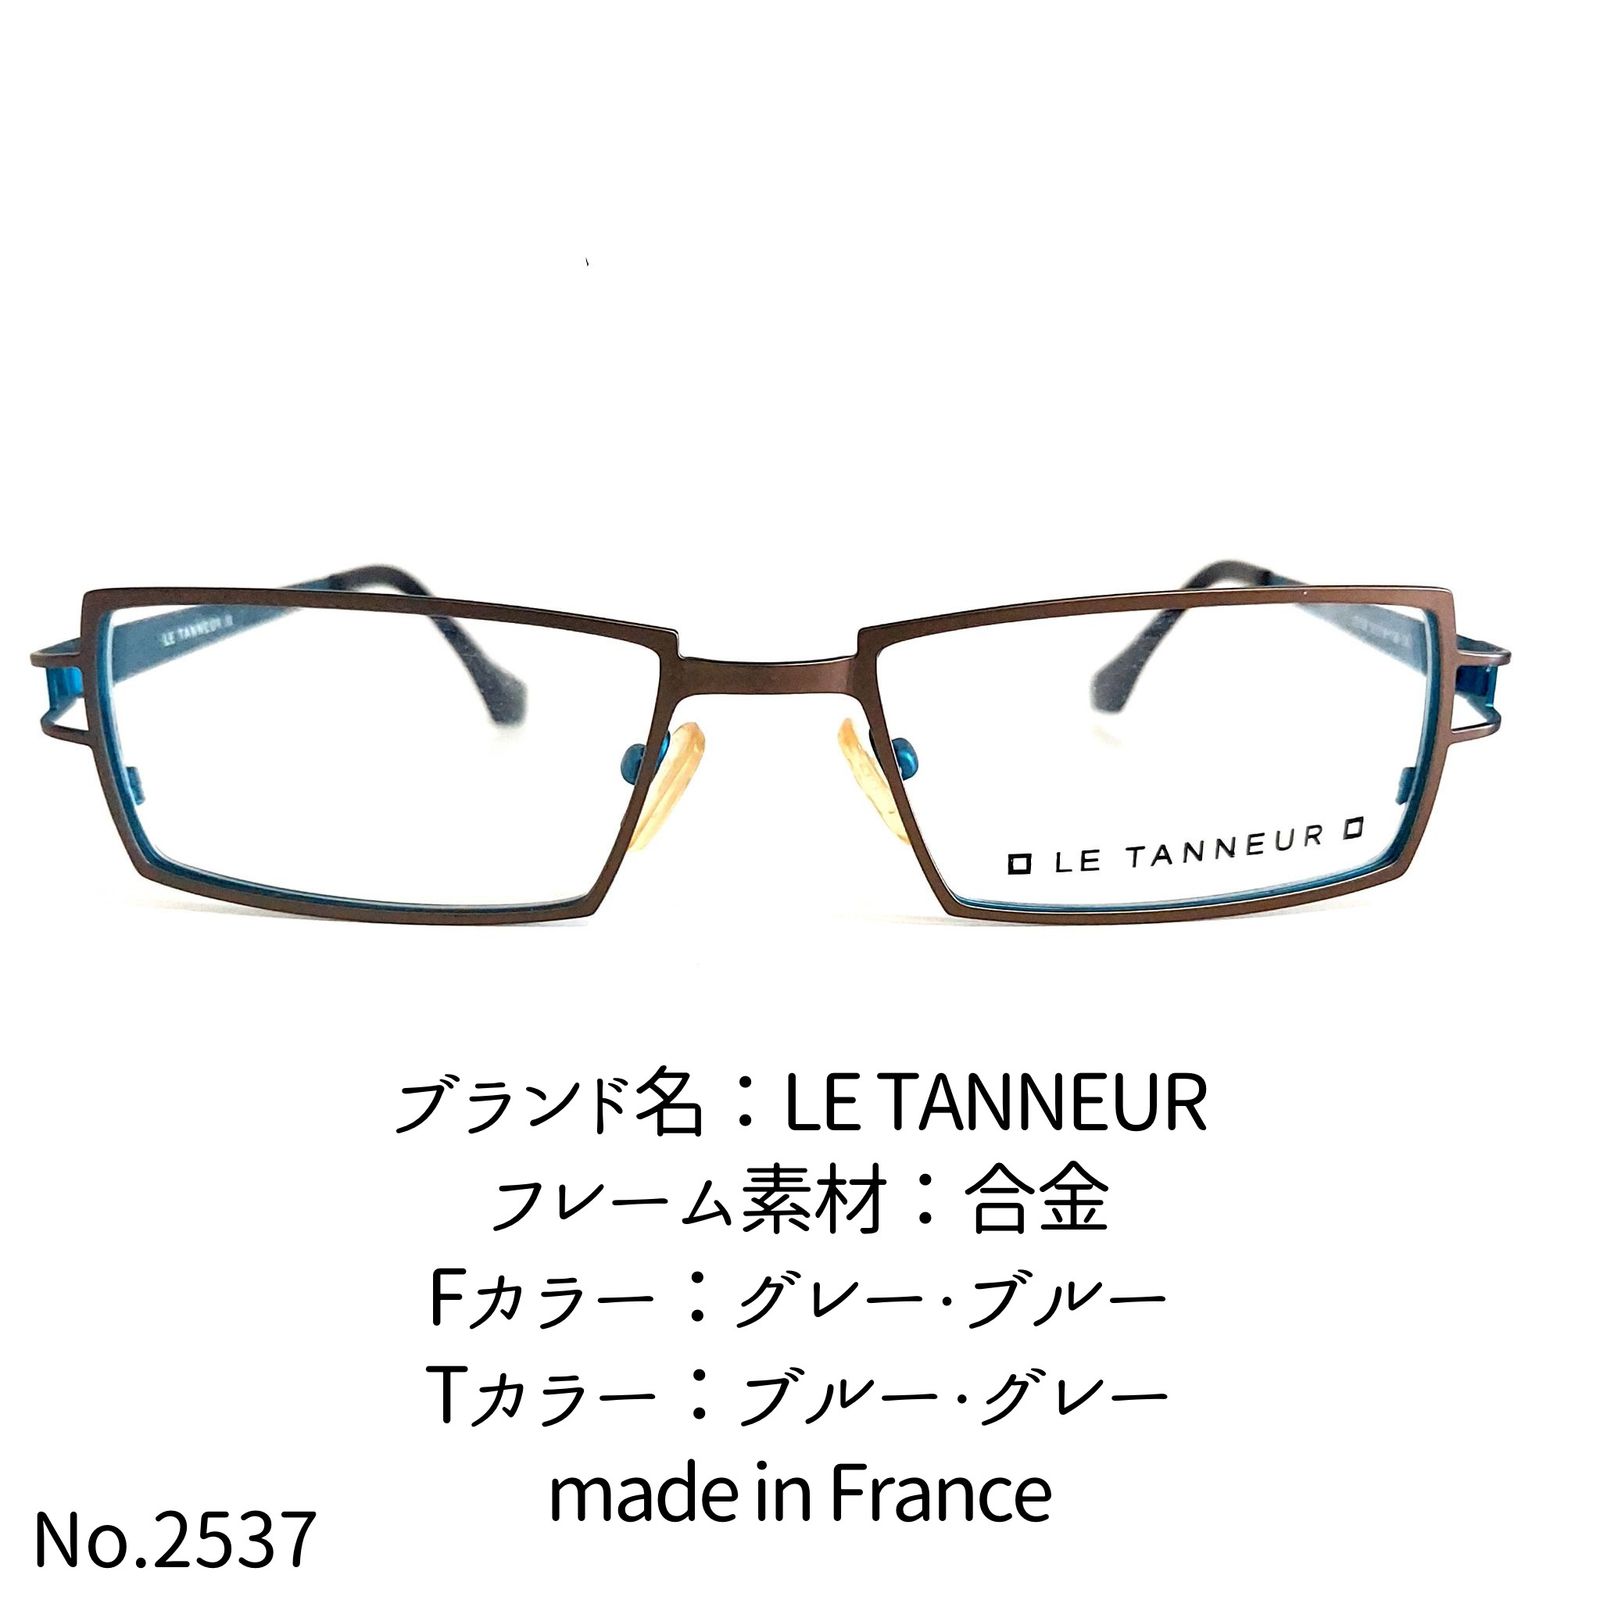 No.2537-メガネ LE TANNEUR【フレームのみ価格】-